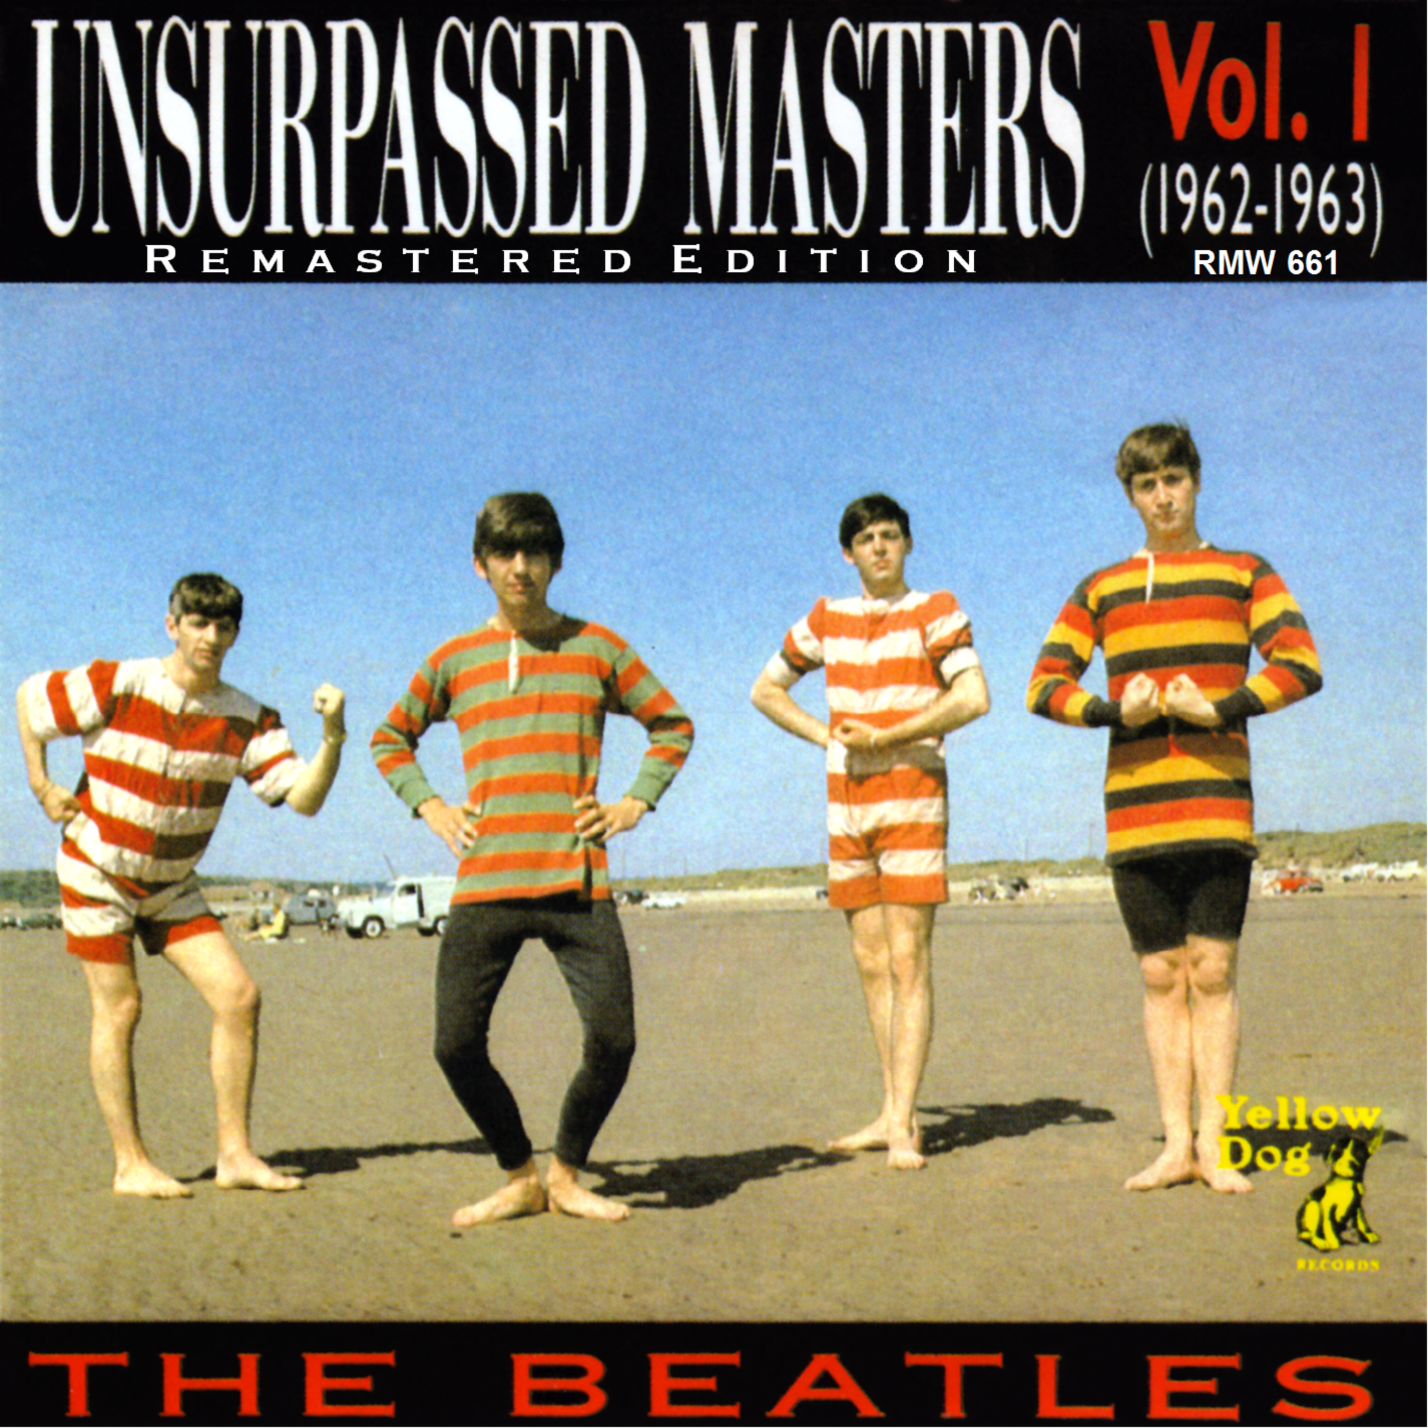 Beatles196xUnsurpassedMastersVol1 (2).png